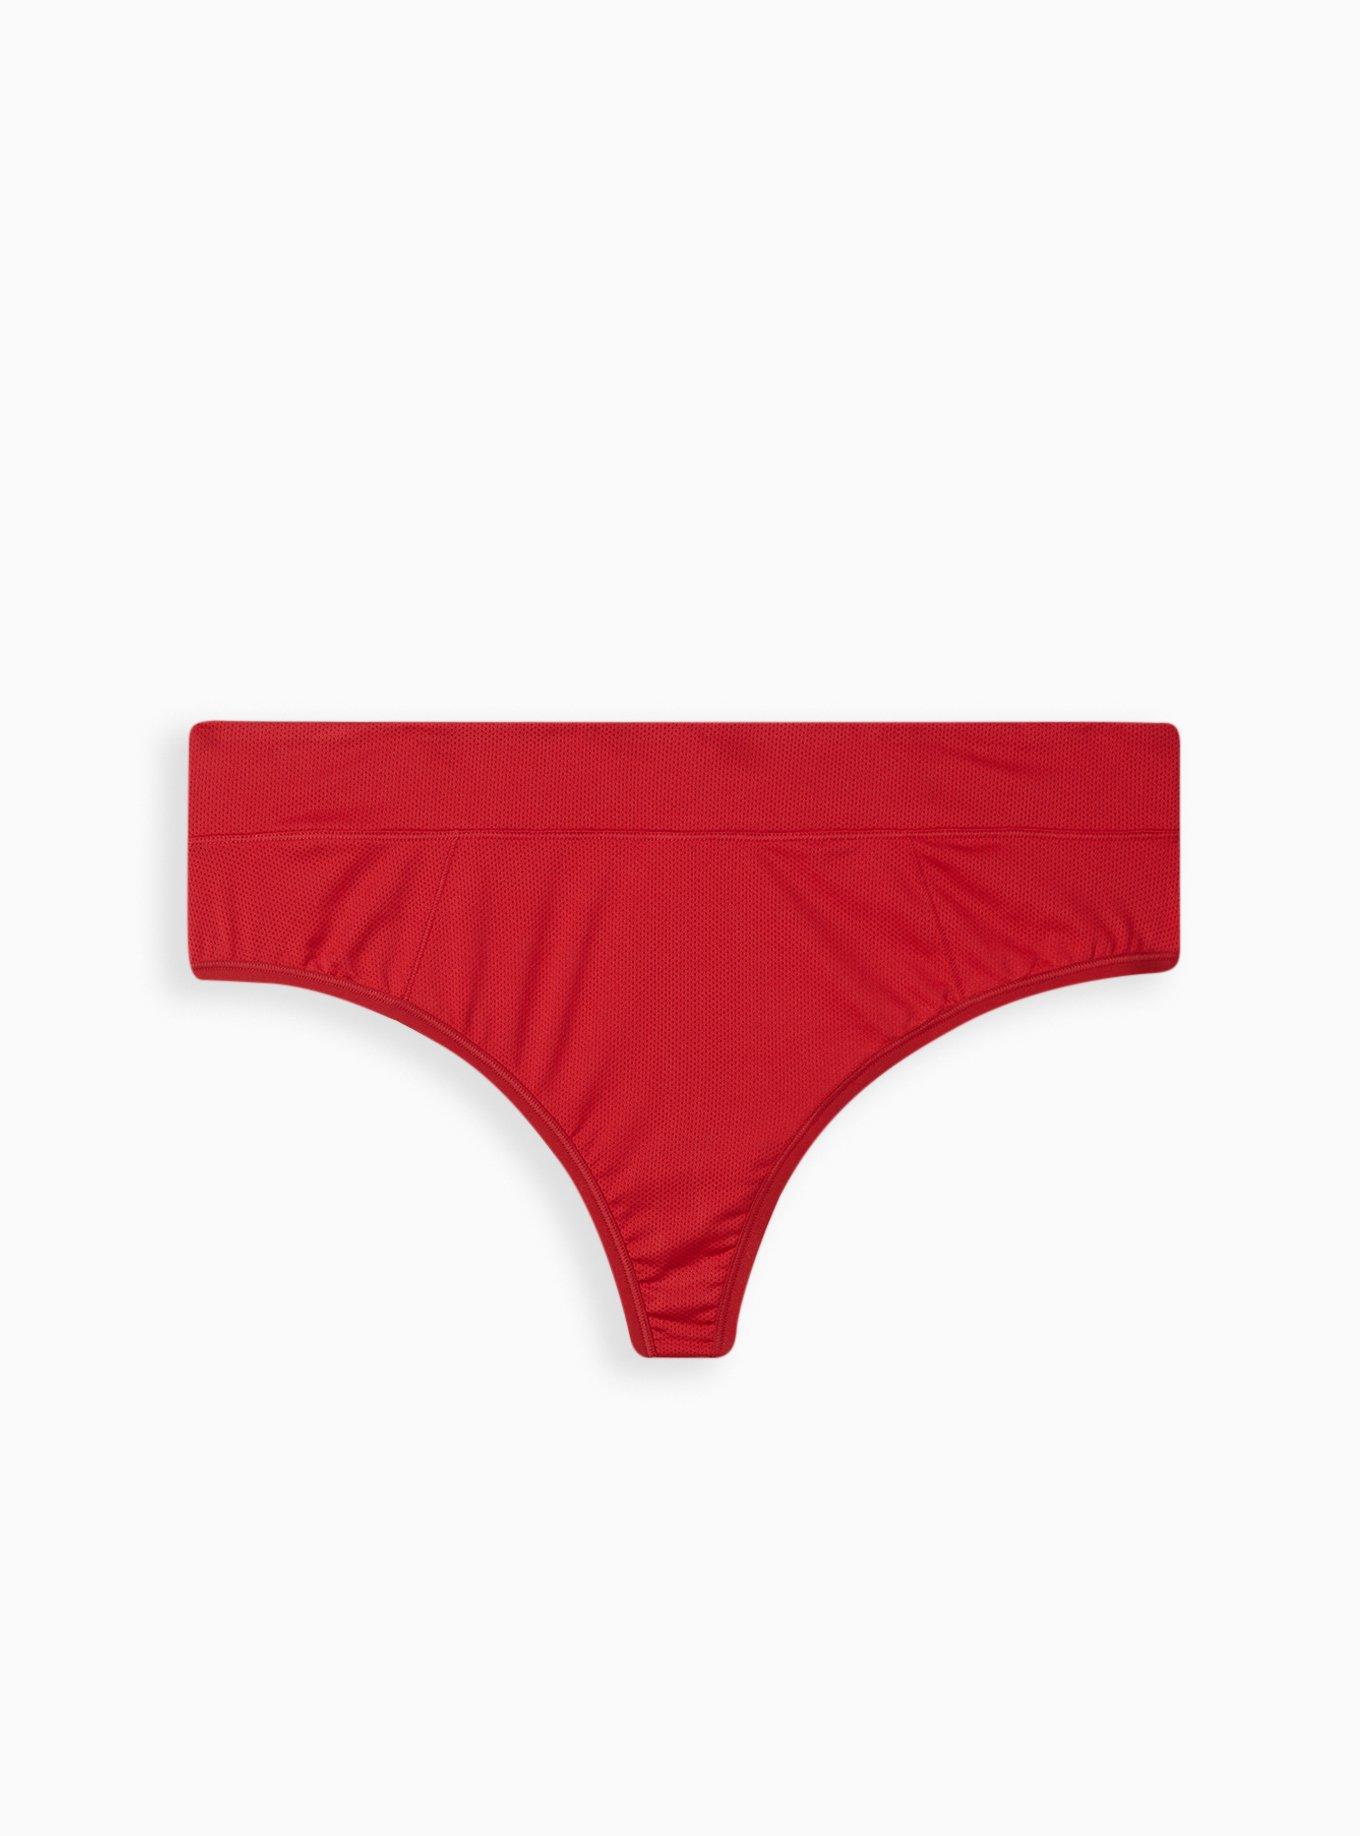 SHORE TRENDZ Womens Sexy Thong Yummy! Lingerie Panties: White (XL